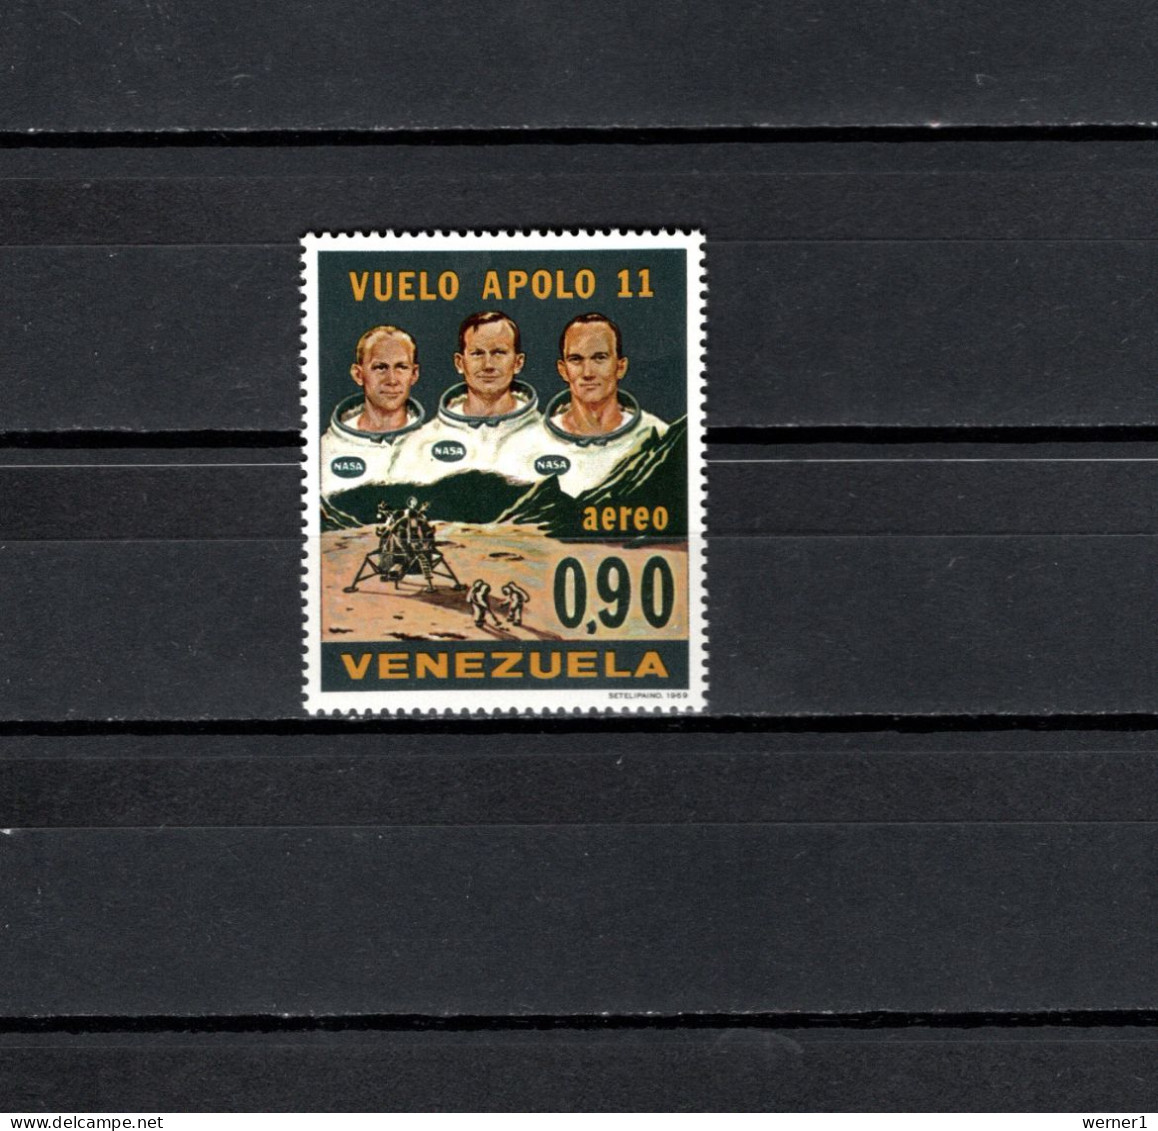 Venezuela 1969 Space, Apollo 11 Moonlanding Stamp MNH - Sud America